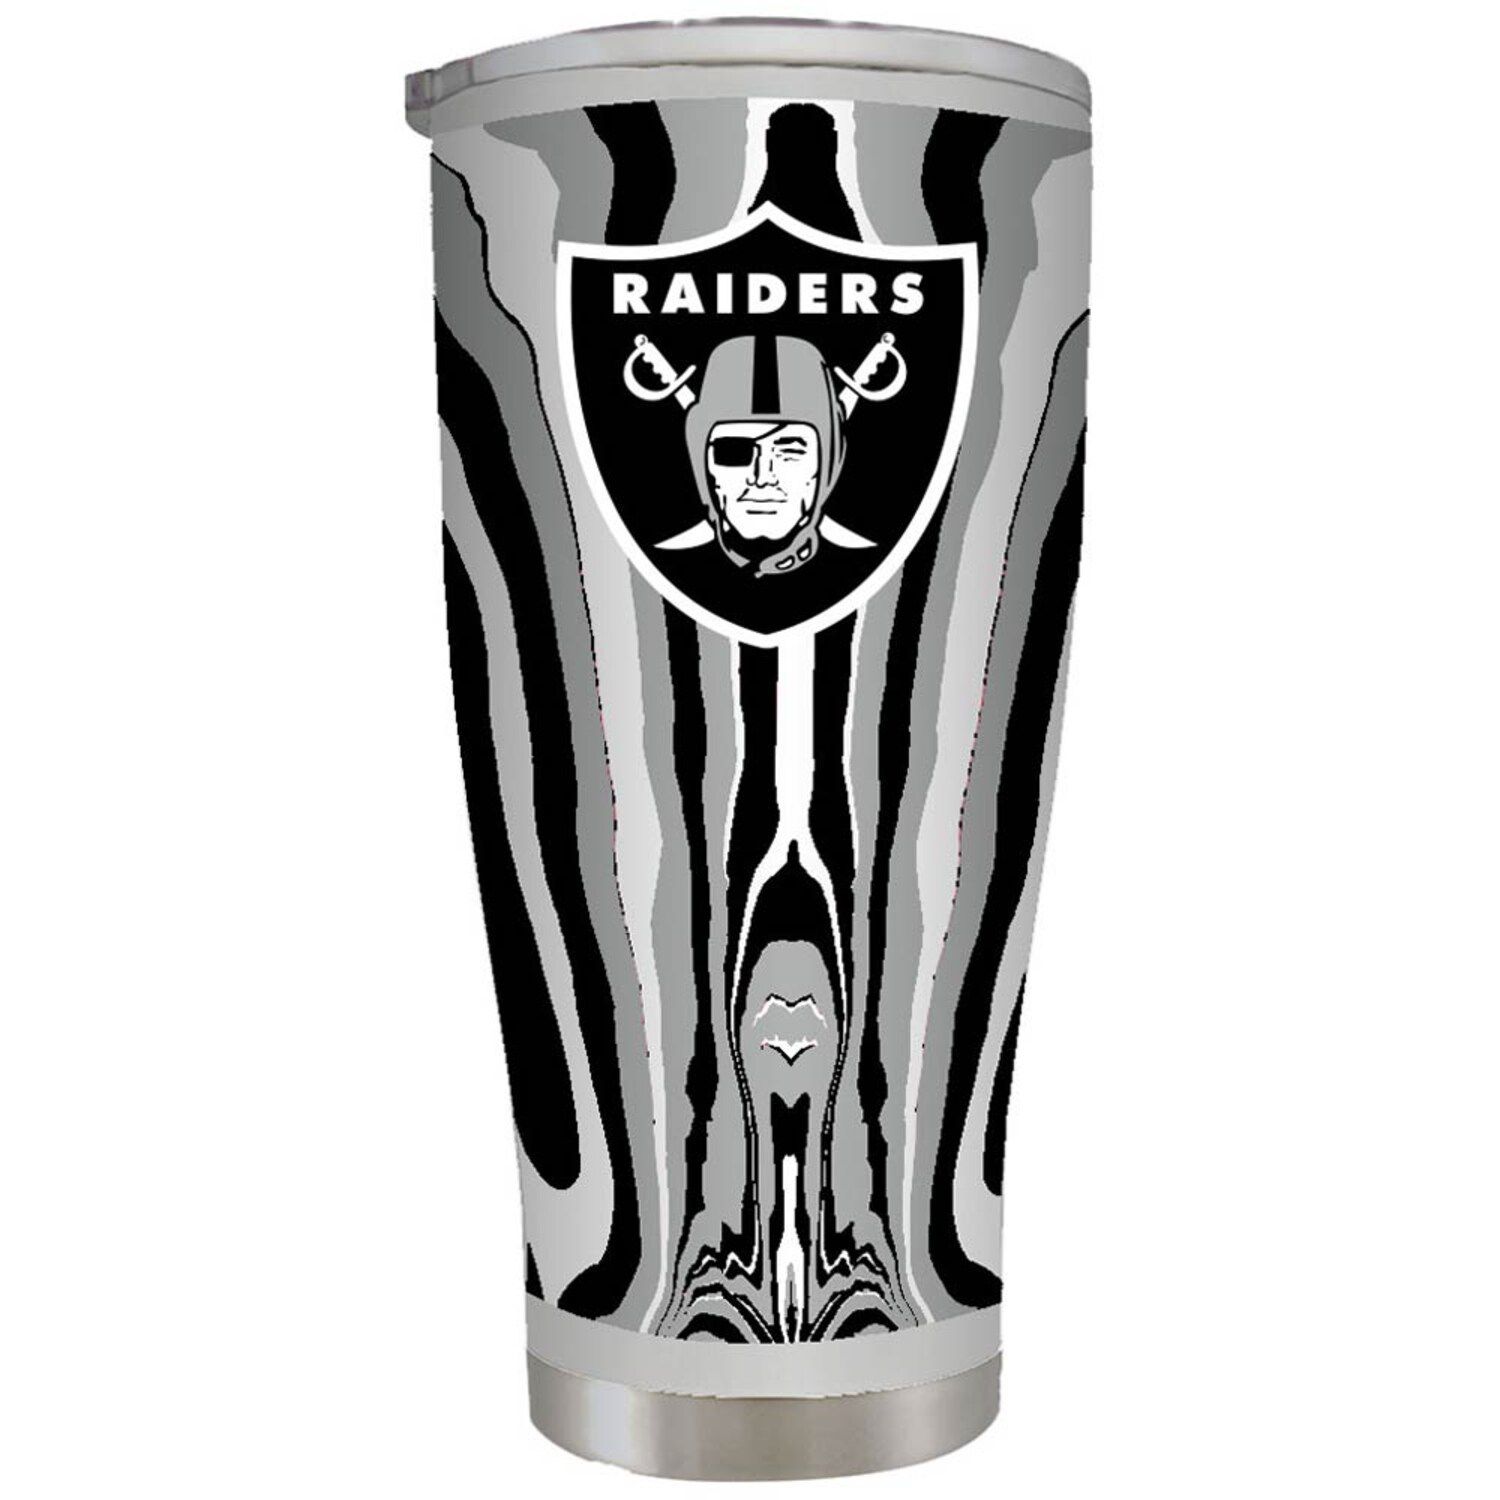 Image for Unbranded Las Vegas Raiders 20oz. Tie-Dye Stainless Steel Tumbler at Kohl's.